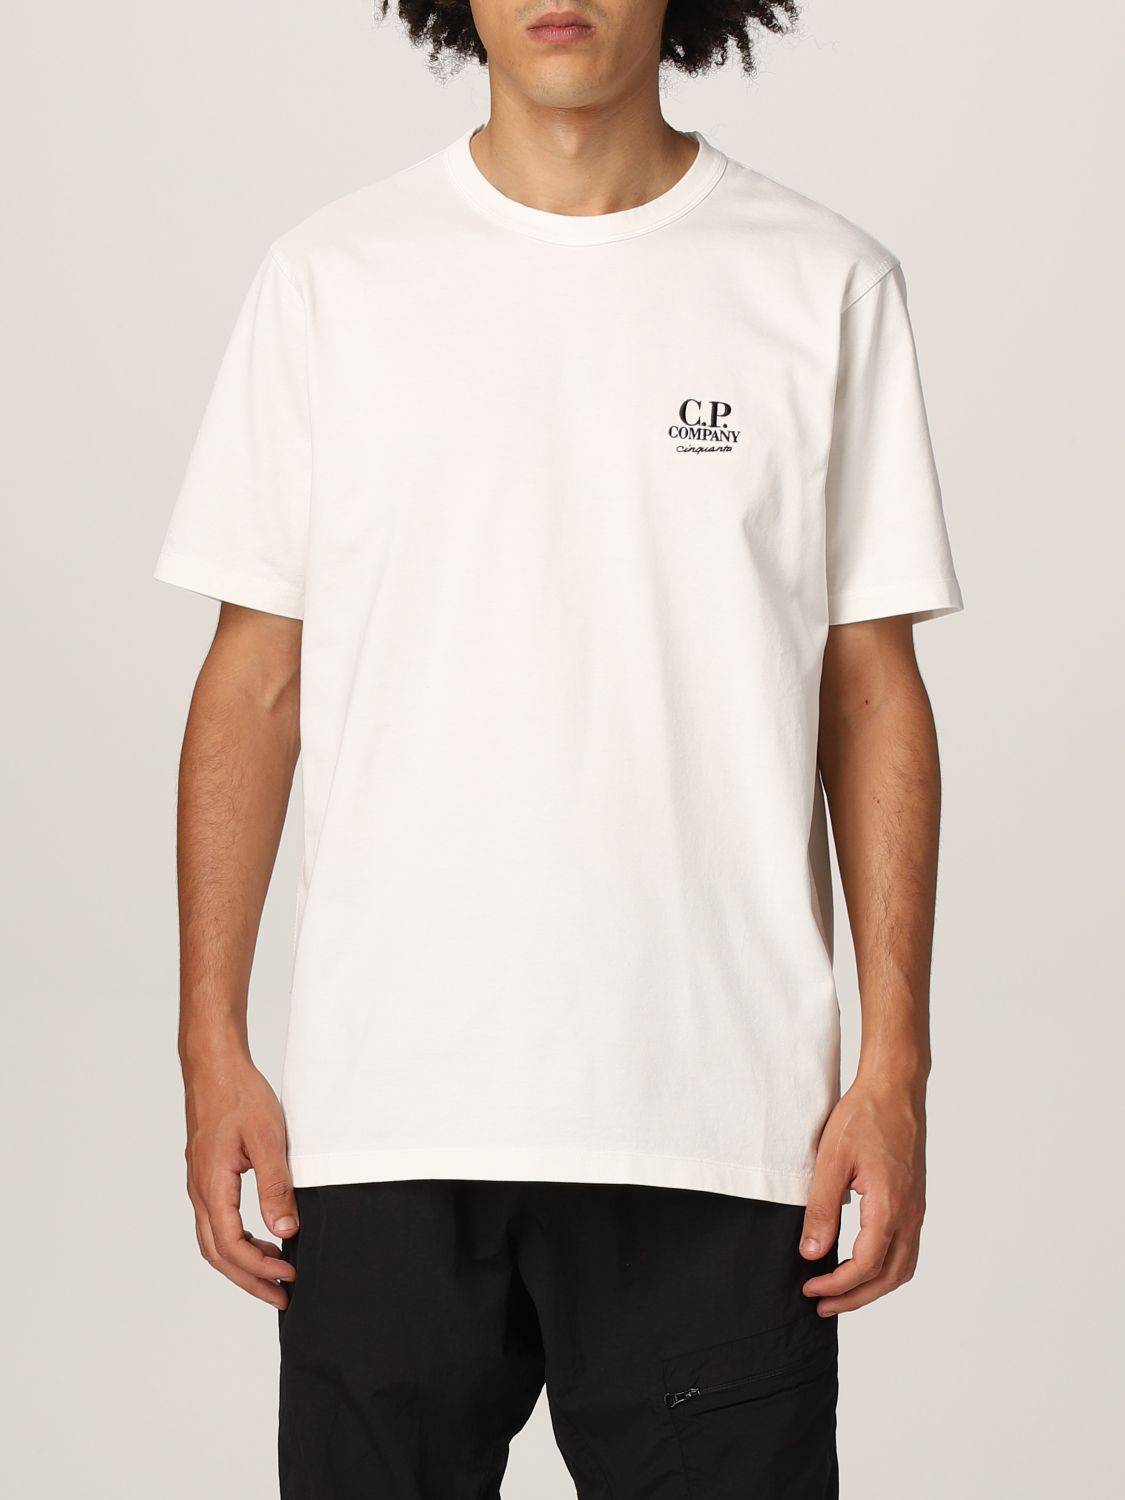 C.P. COMPANY: t-shirt for man - White | C.p. Company t-shirt ...